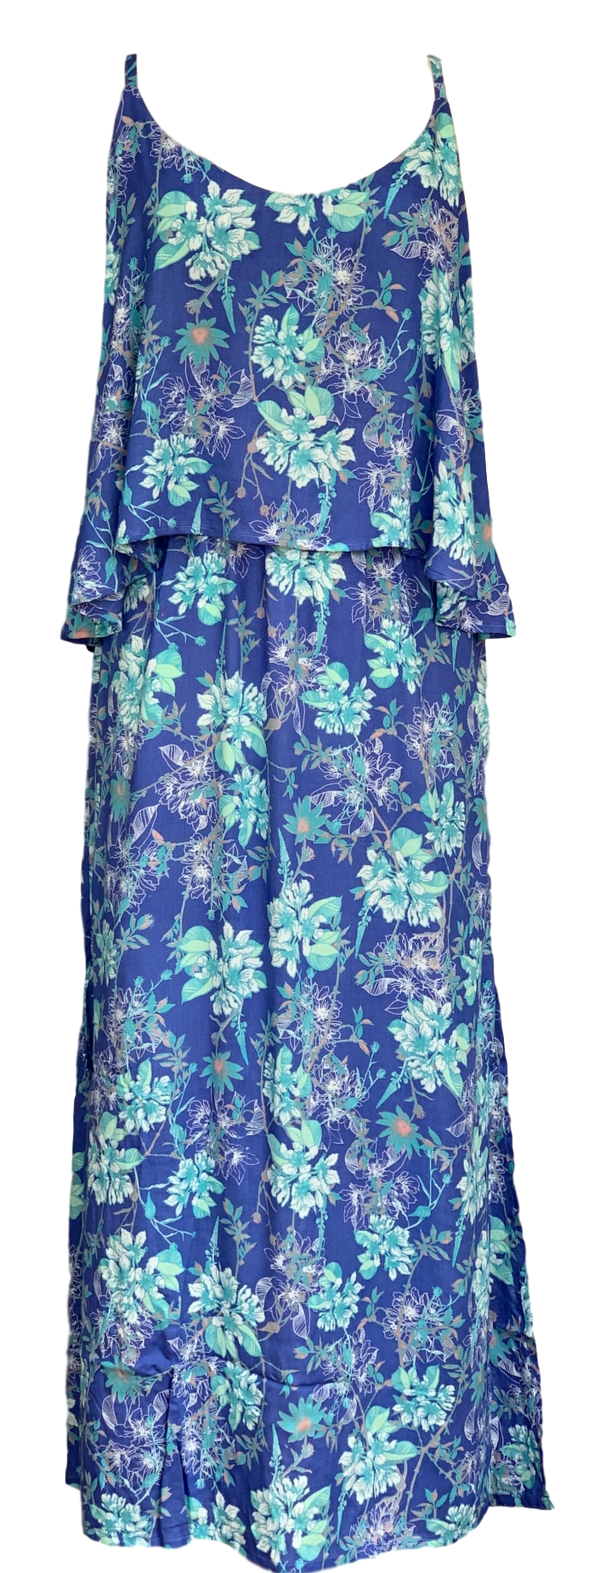 Adriana Layer Dress - Cornflower Blue and Grey Floral